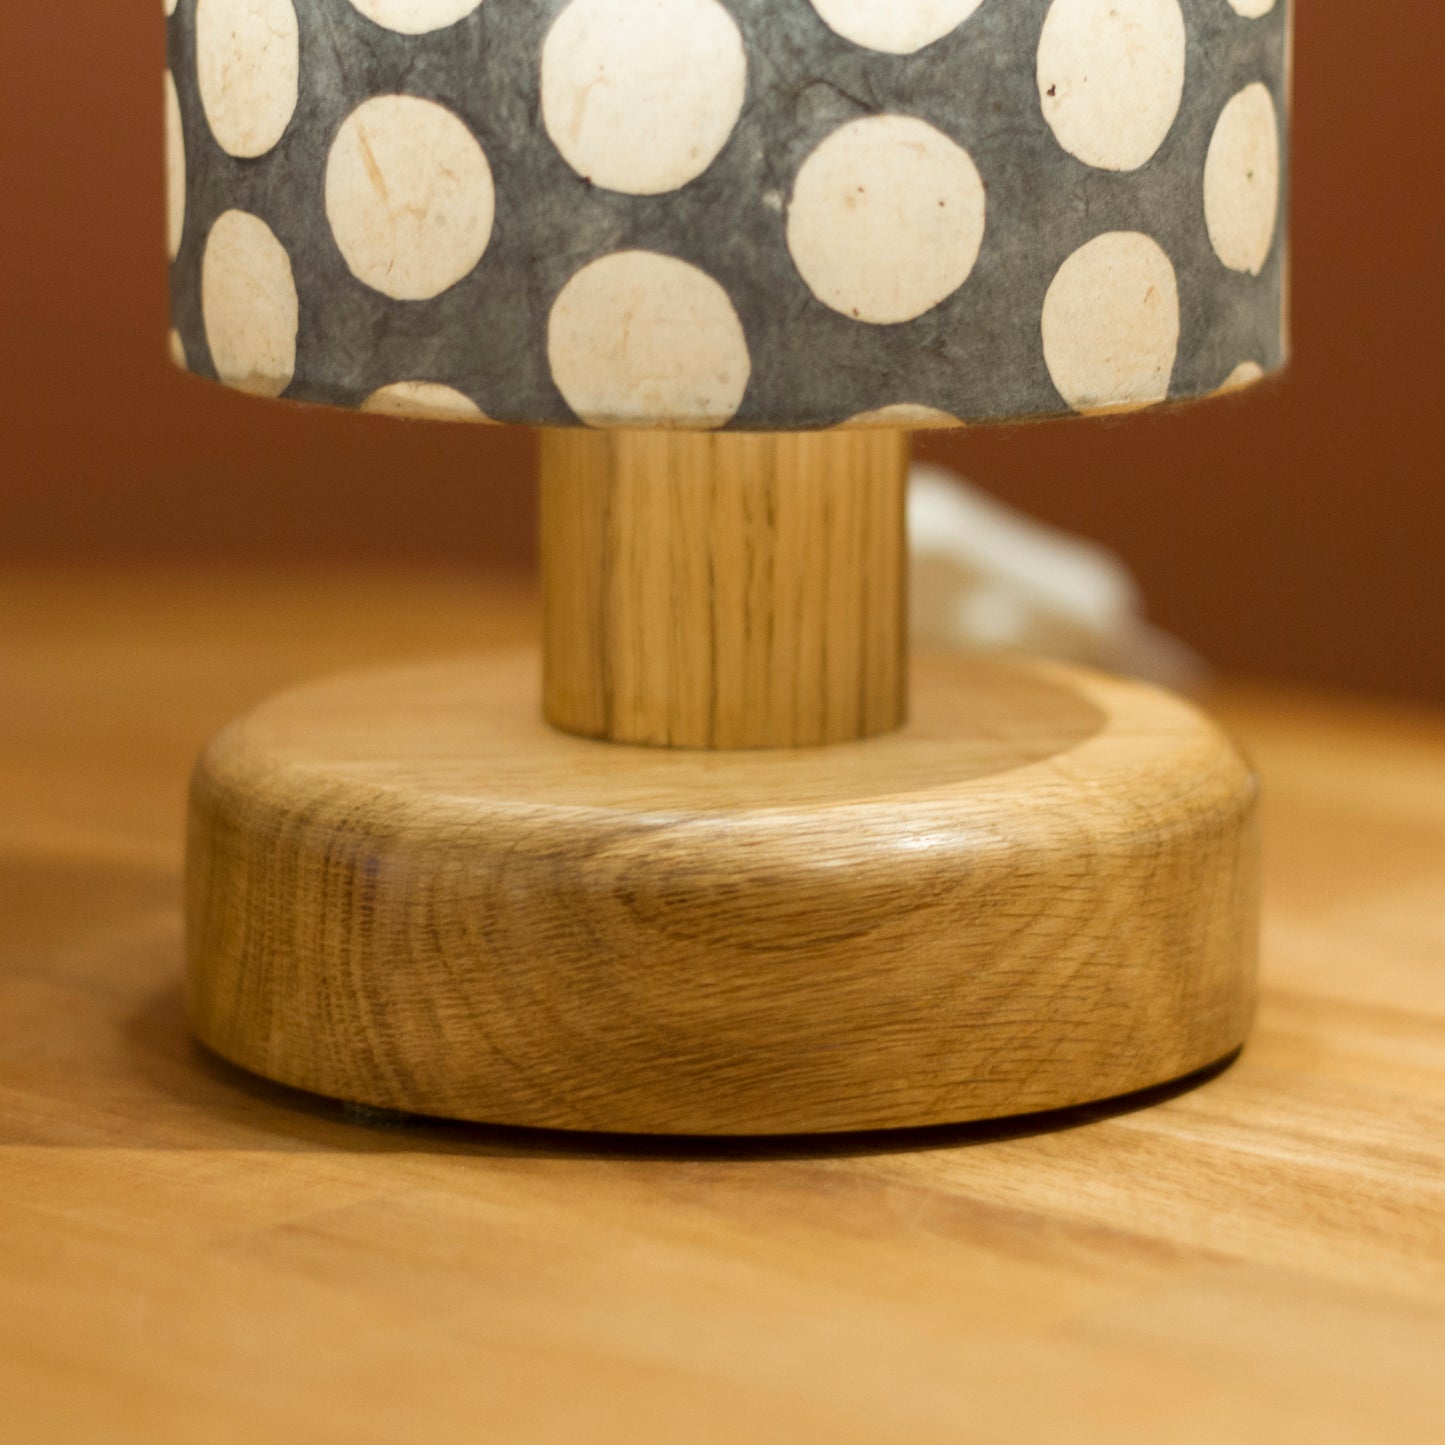 Round Oak Table Lamp with 15cm x 30cm Lamp Shade in Batik Grey Dots P78